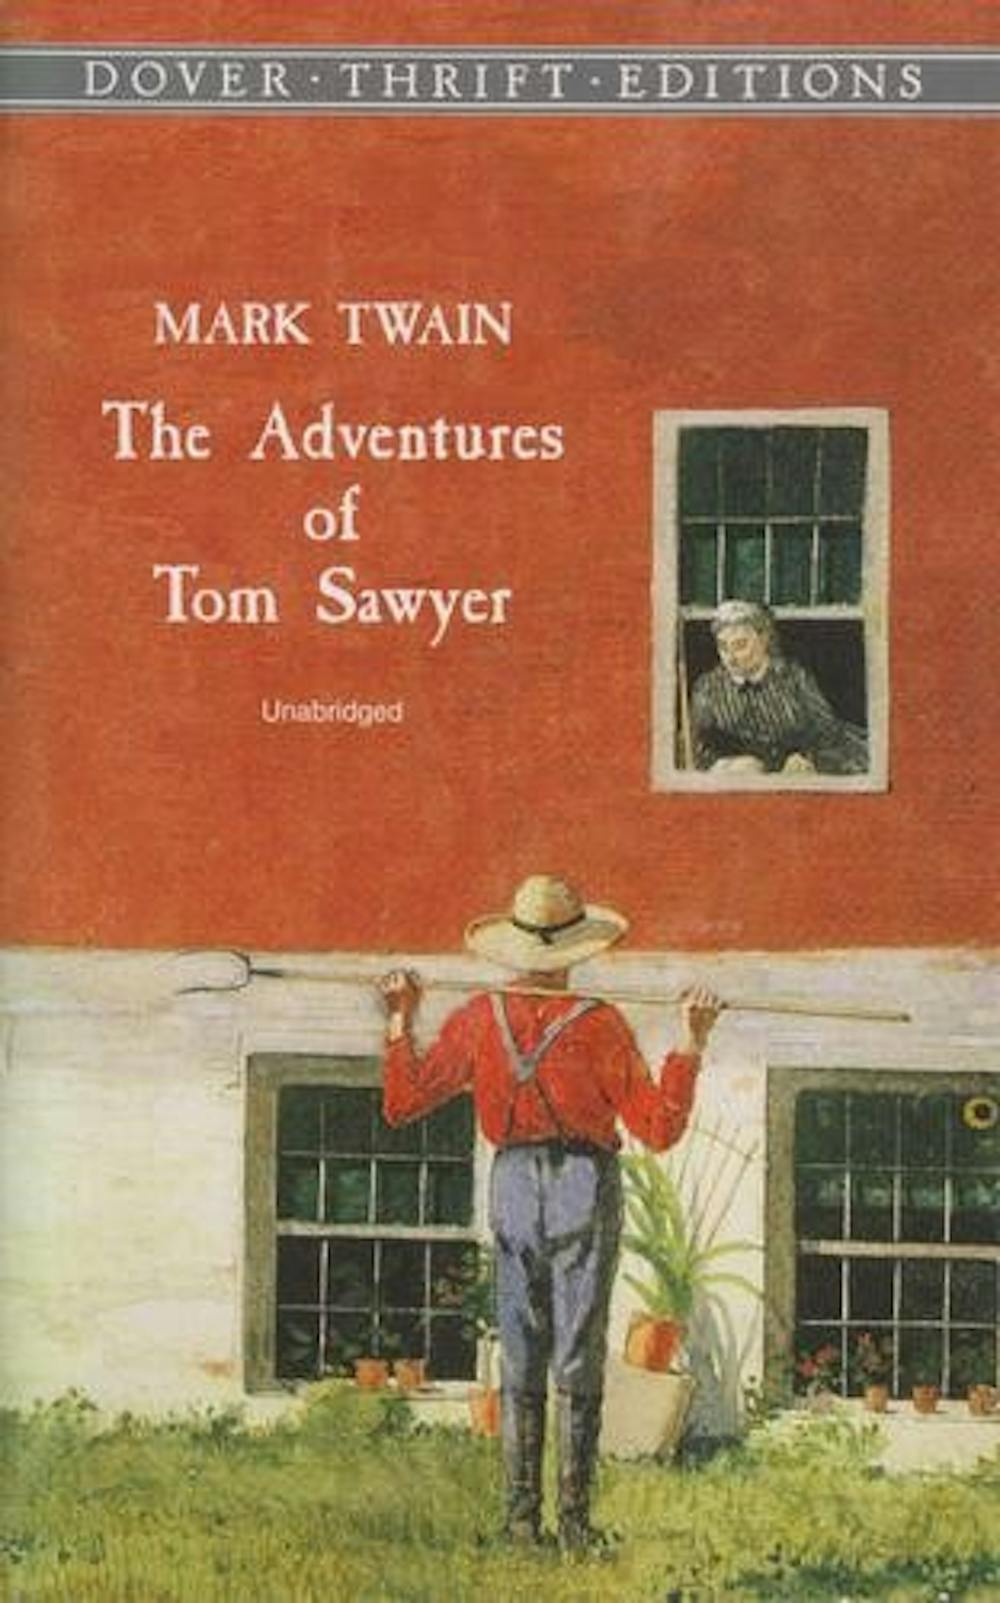 Classic ‘Tom Sawyer’ still relevant today